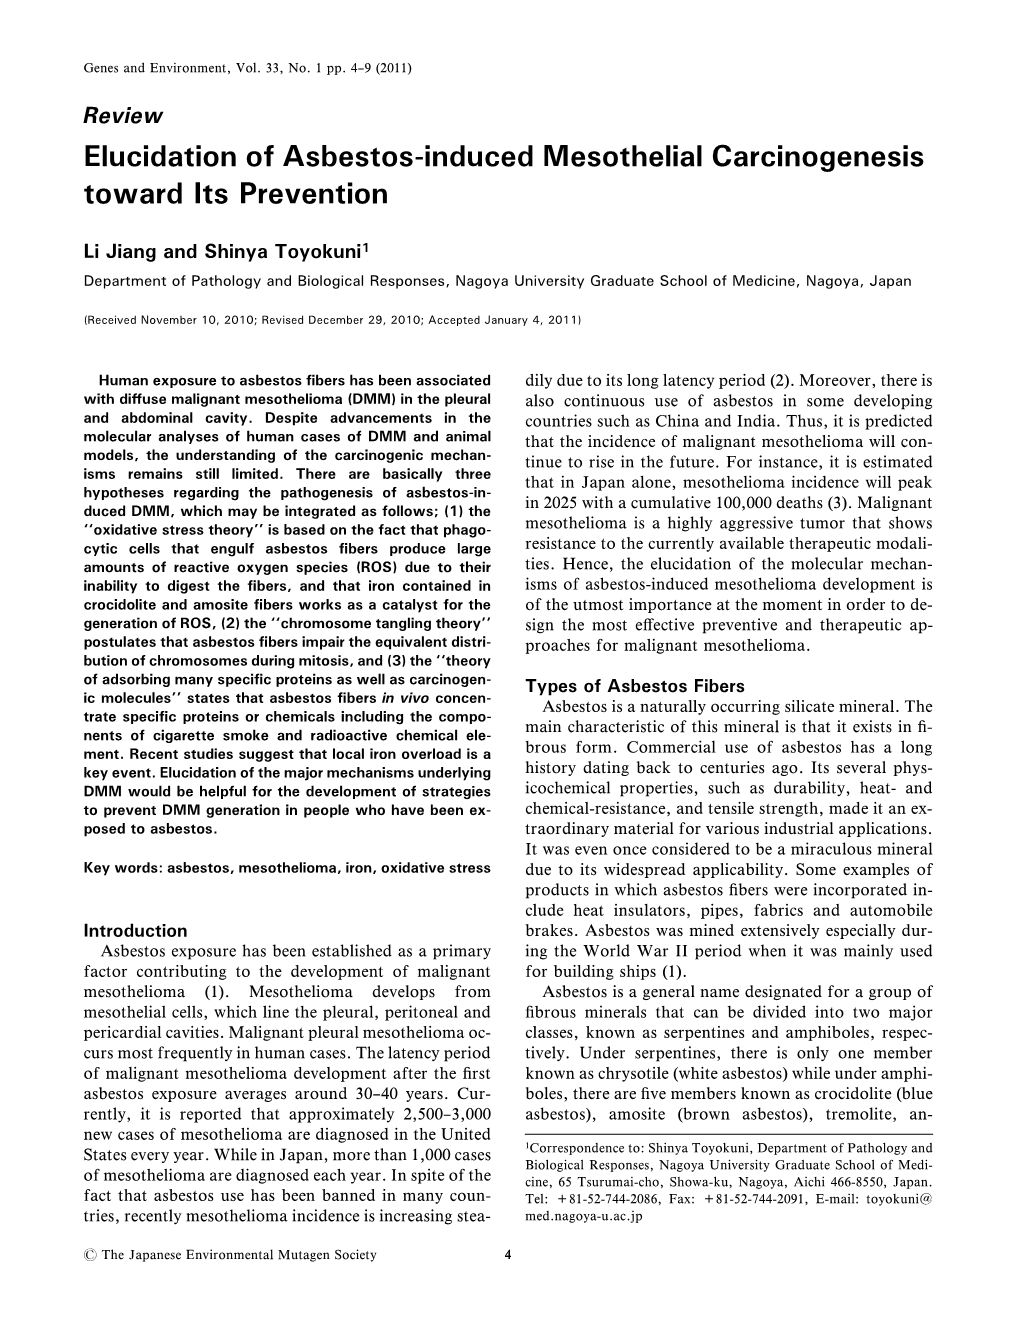 Elucidation of Asbestos-Induced Mesothelial Carcinogenesis Toward Its Prevention